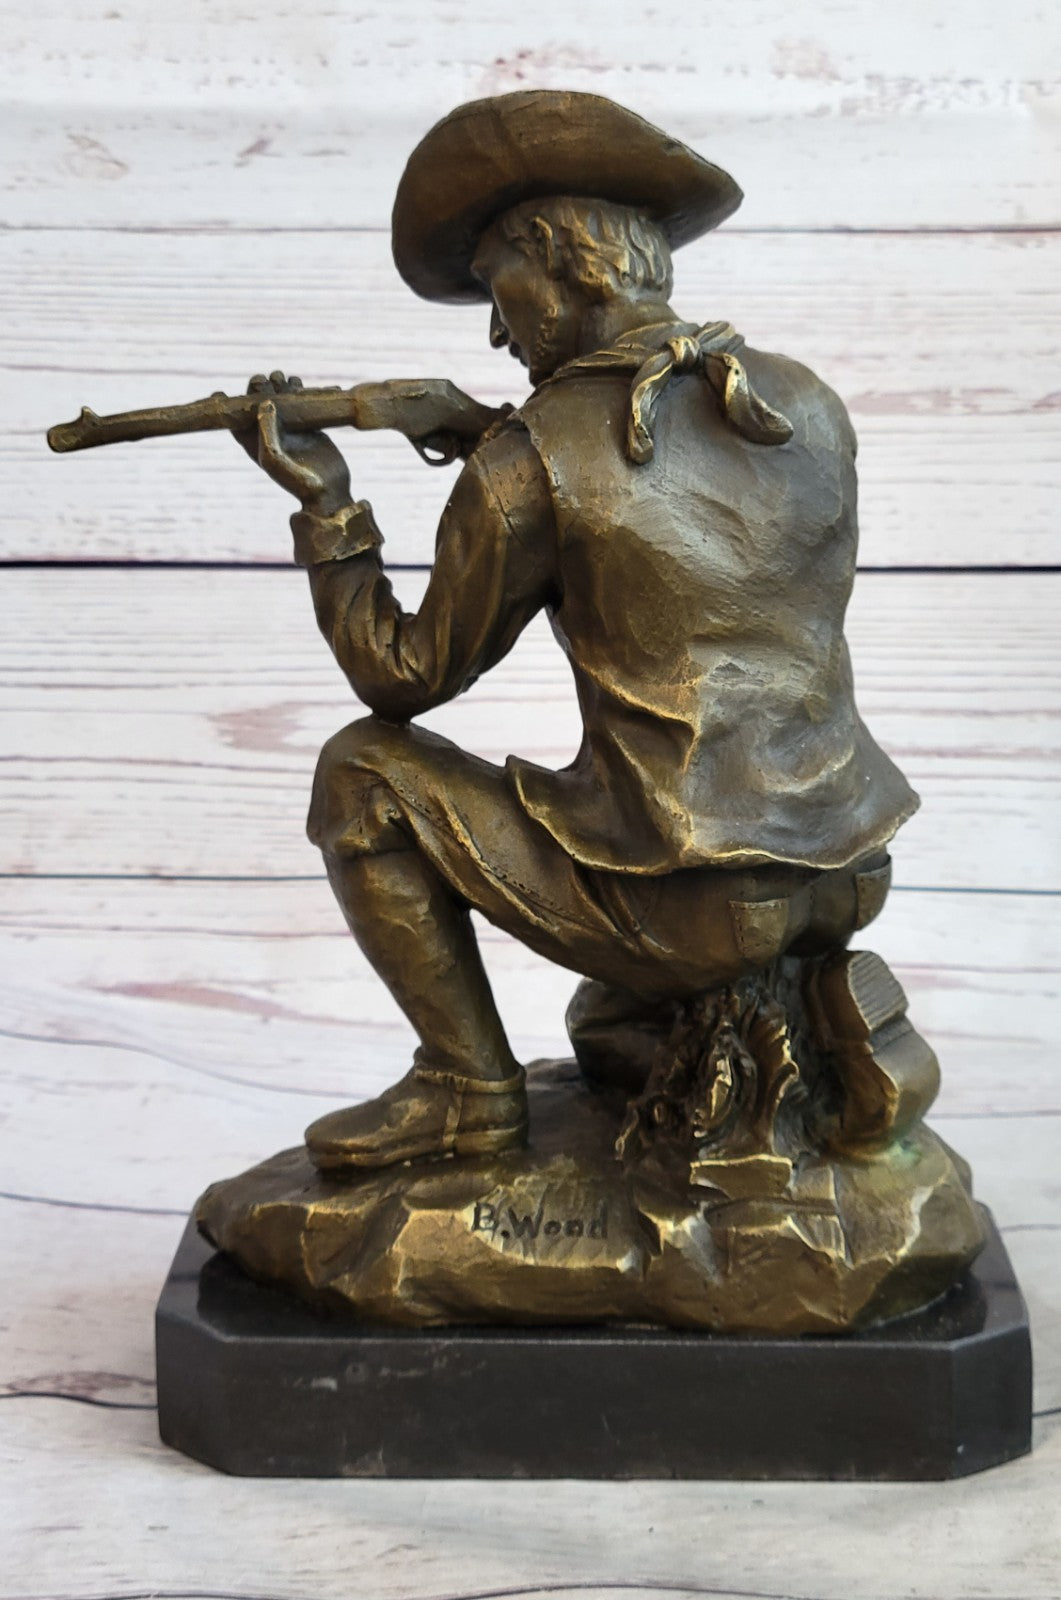 Handcrafted bronze sculpture SALE Rifle Bullet Gun W/ Cowboy Deco Art Western